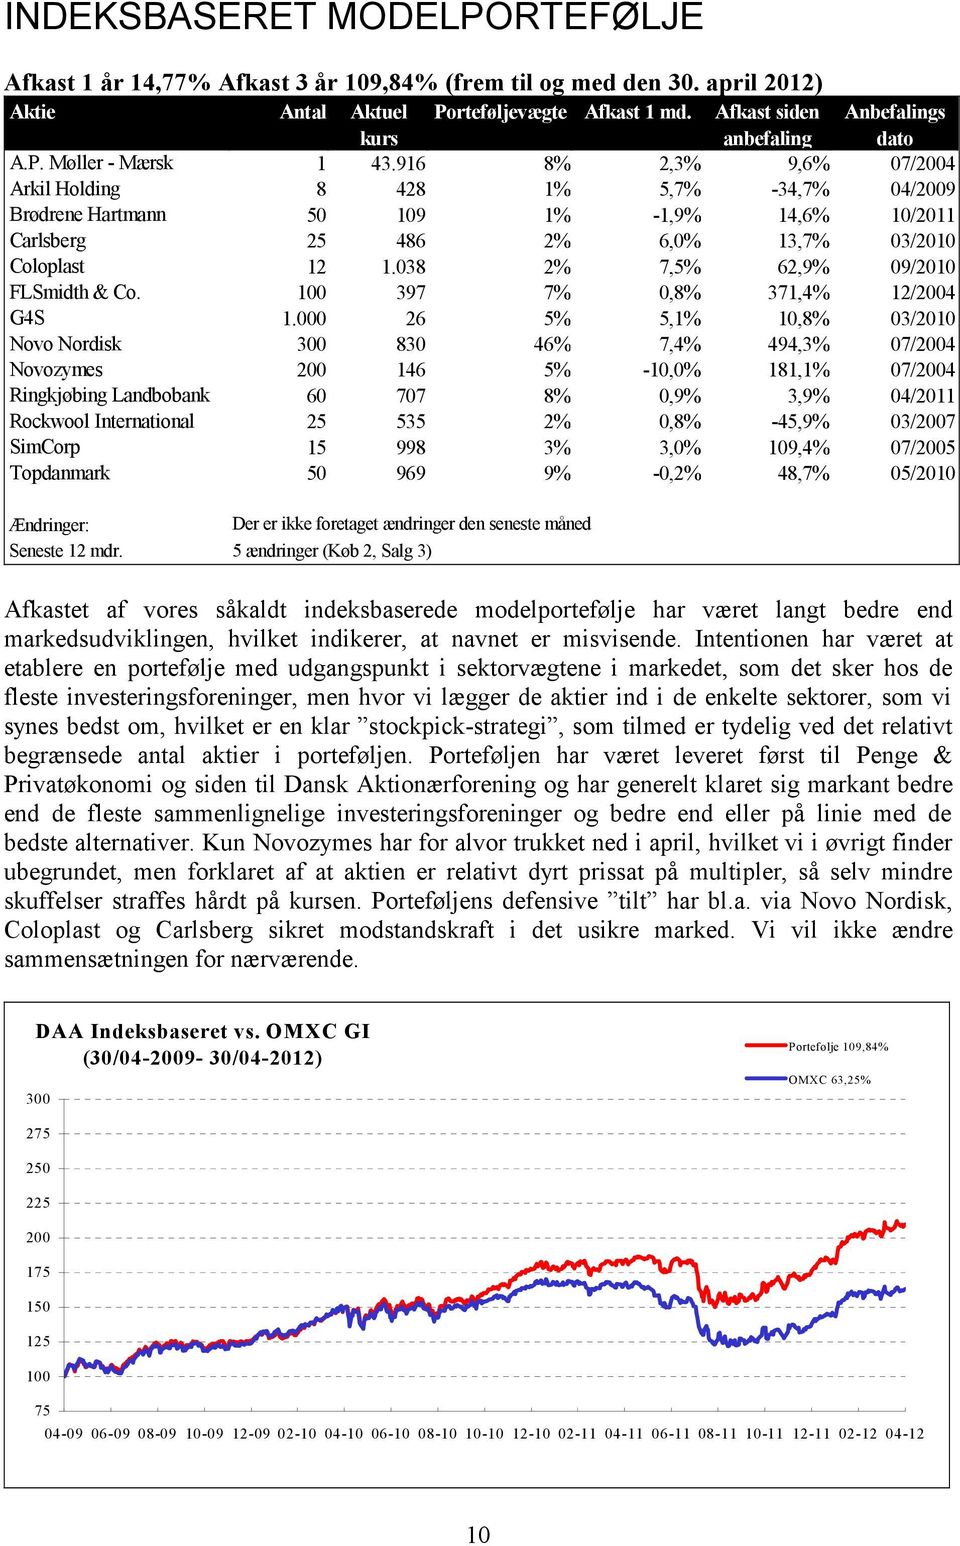 916 8% 2,3% 9,6% 07/2004 Arkil Holding 8 428 1% 5,7% 34,7% 04/2009 Brødrene Hartmann 50 109 1% 1,9% 14,6% 10/2011 Carlsberg 25 486 2% 6, 13,7% 03/2010 Coloplast 12 1.